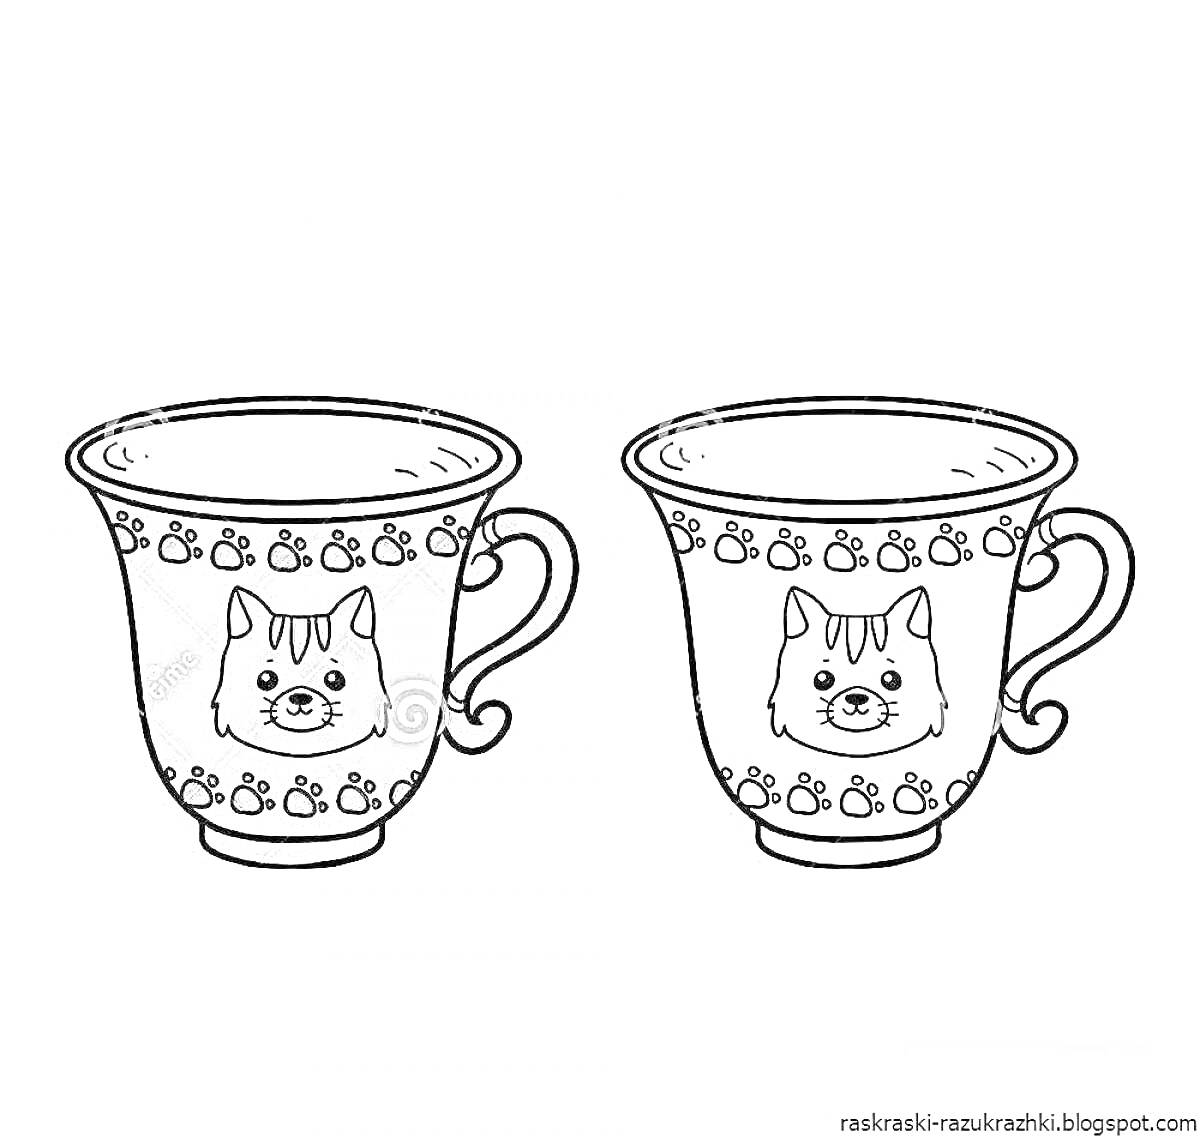 Раскраска две чашки с рисунком кота и яблок